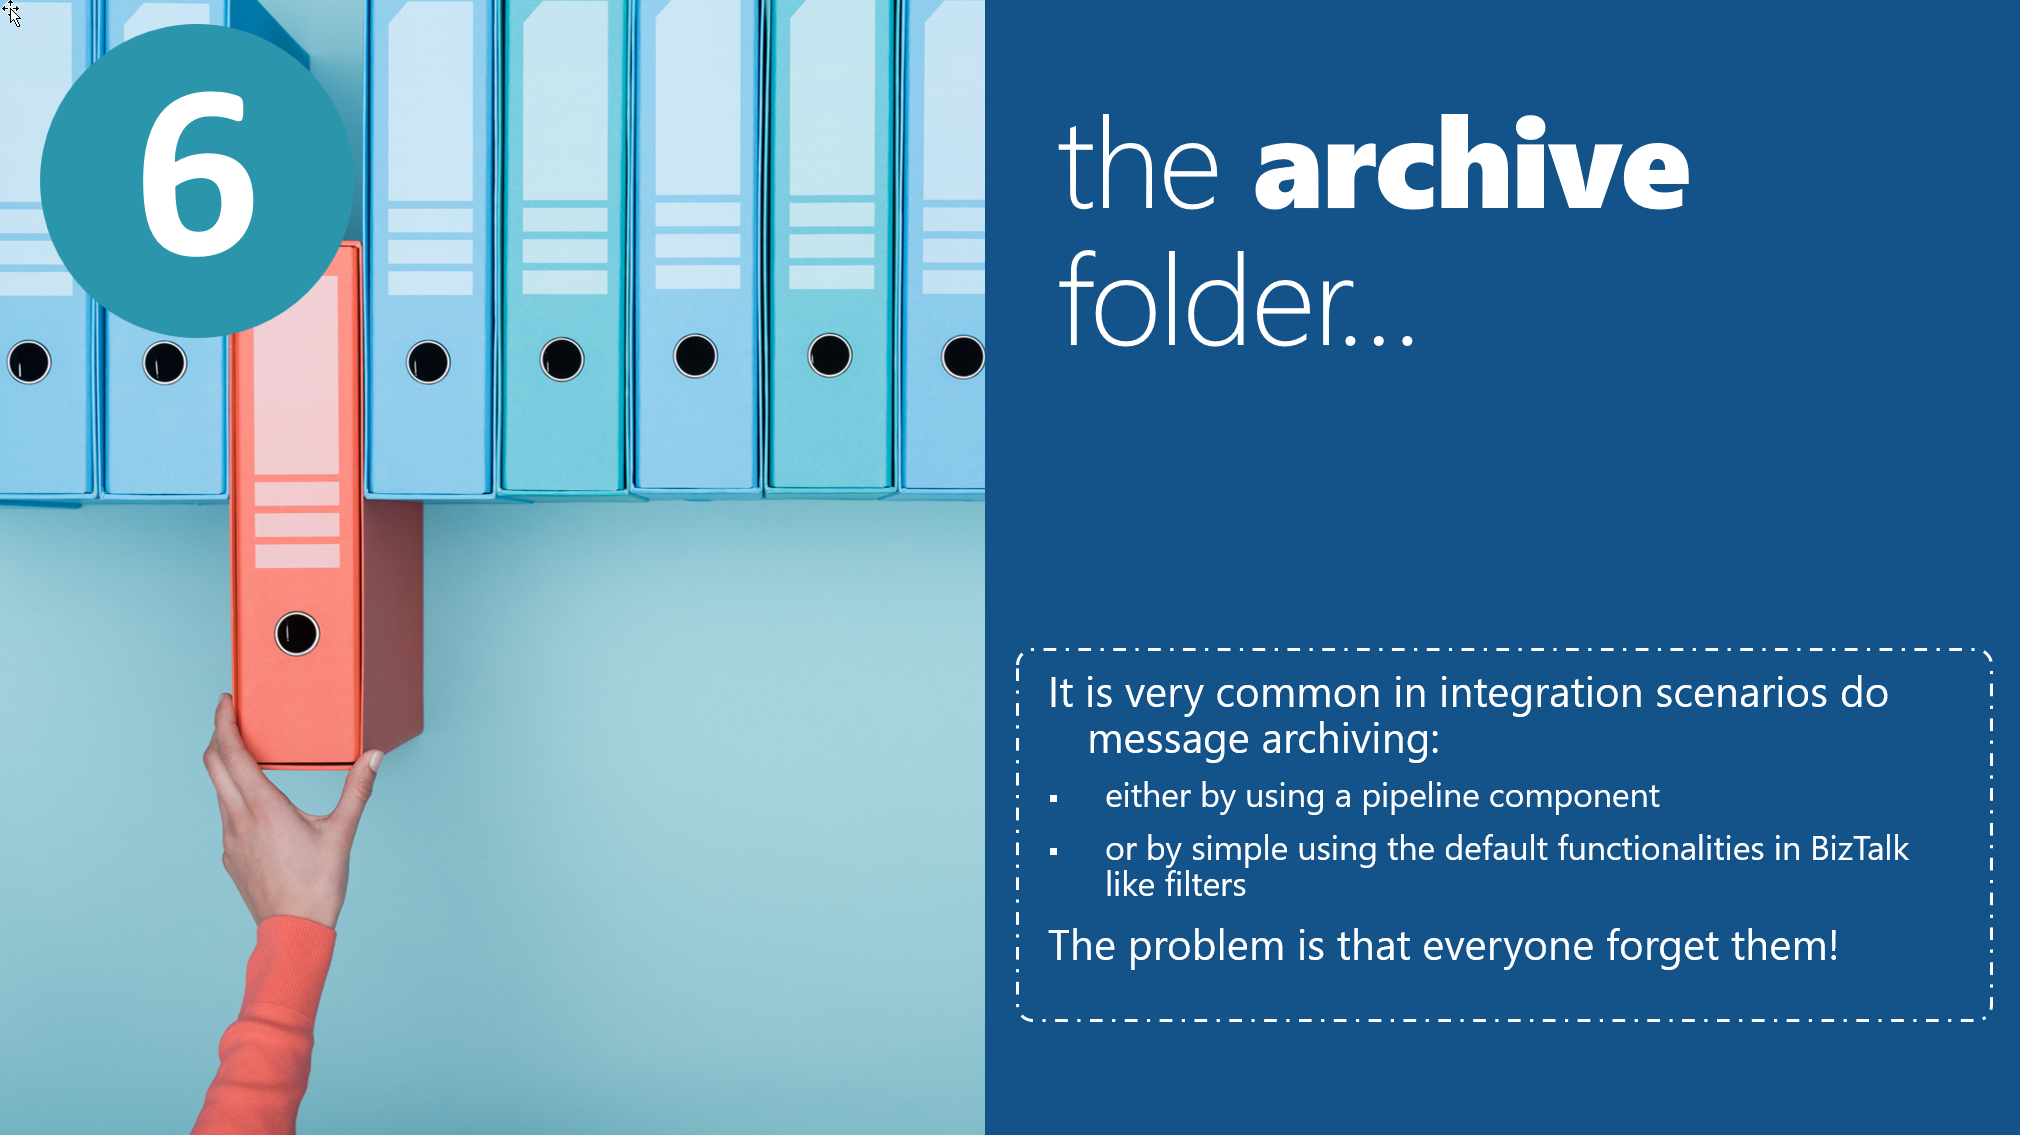 biztalk archiving folders